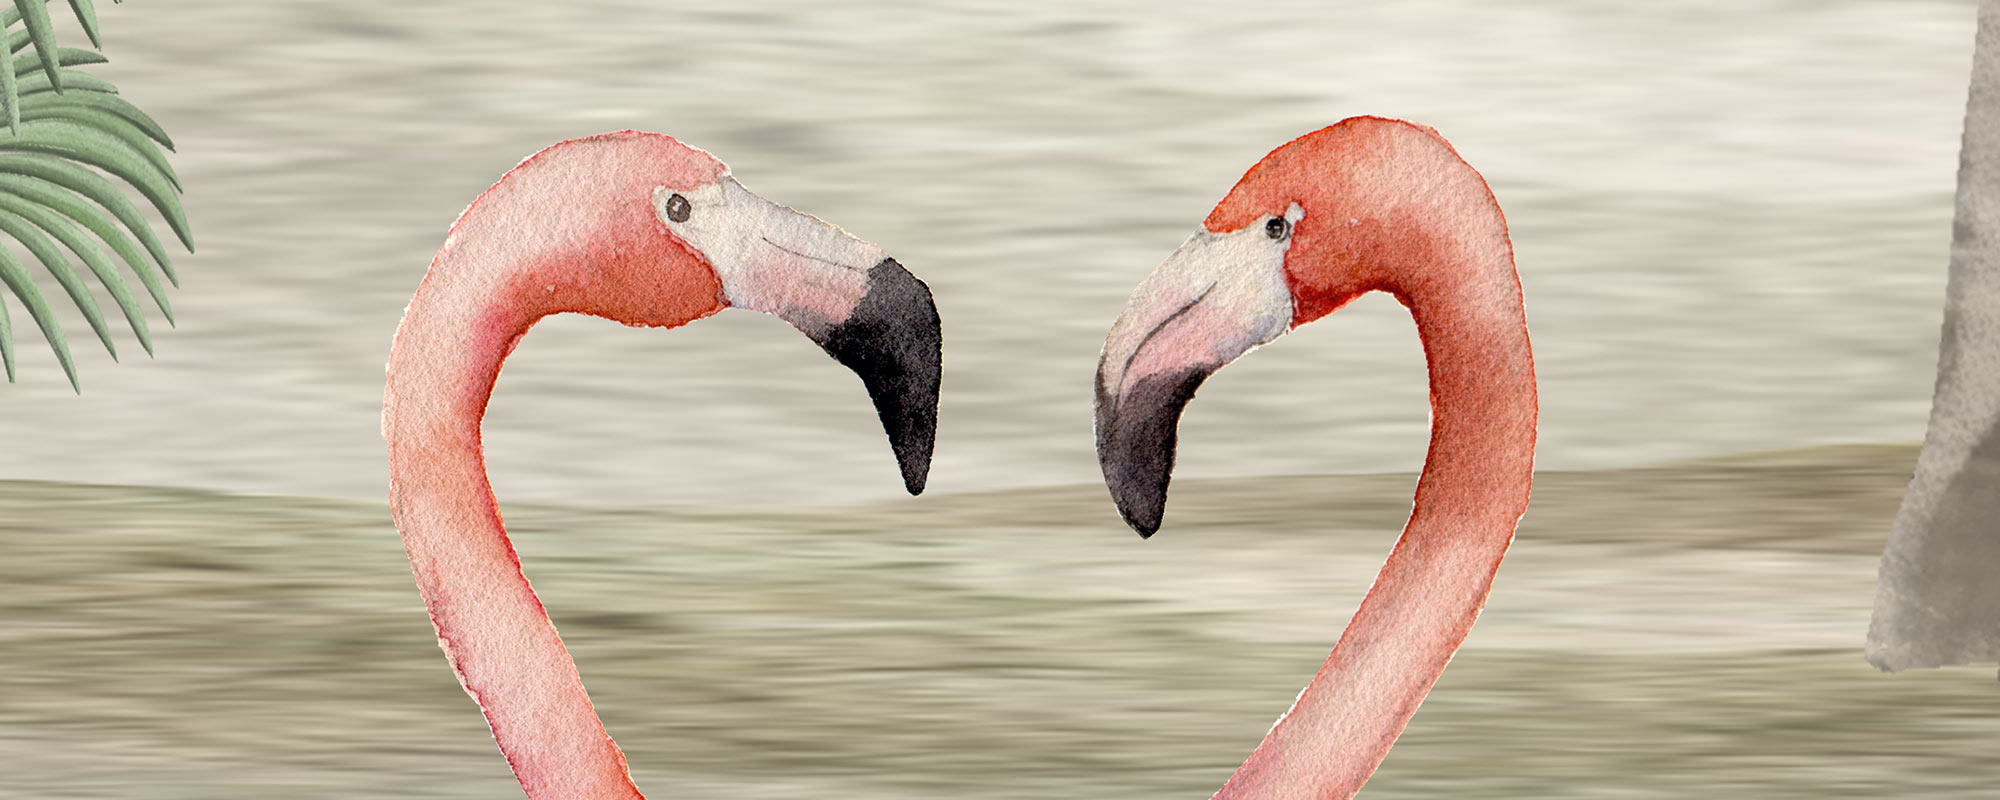 Flamingo Oasis